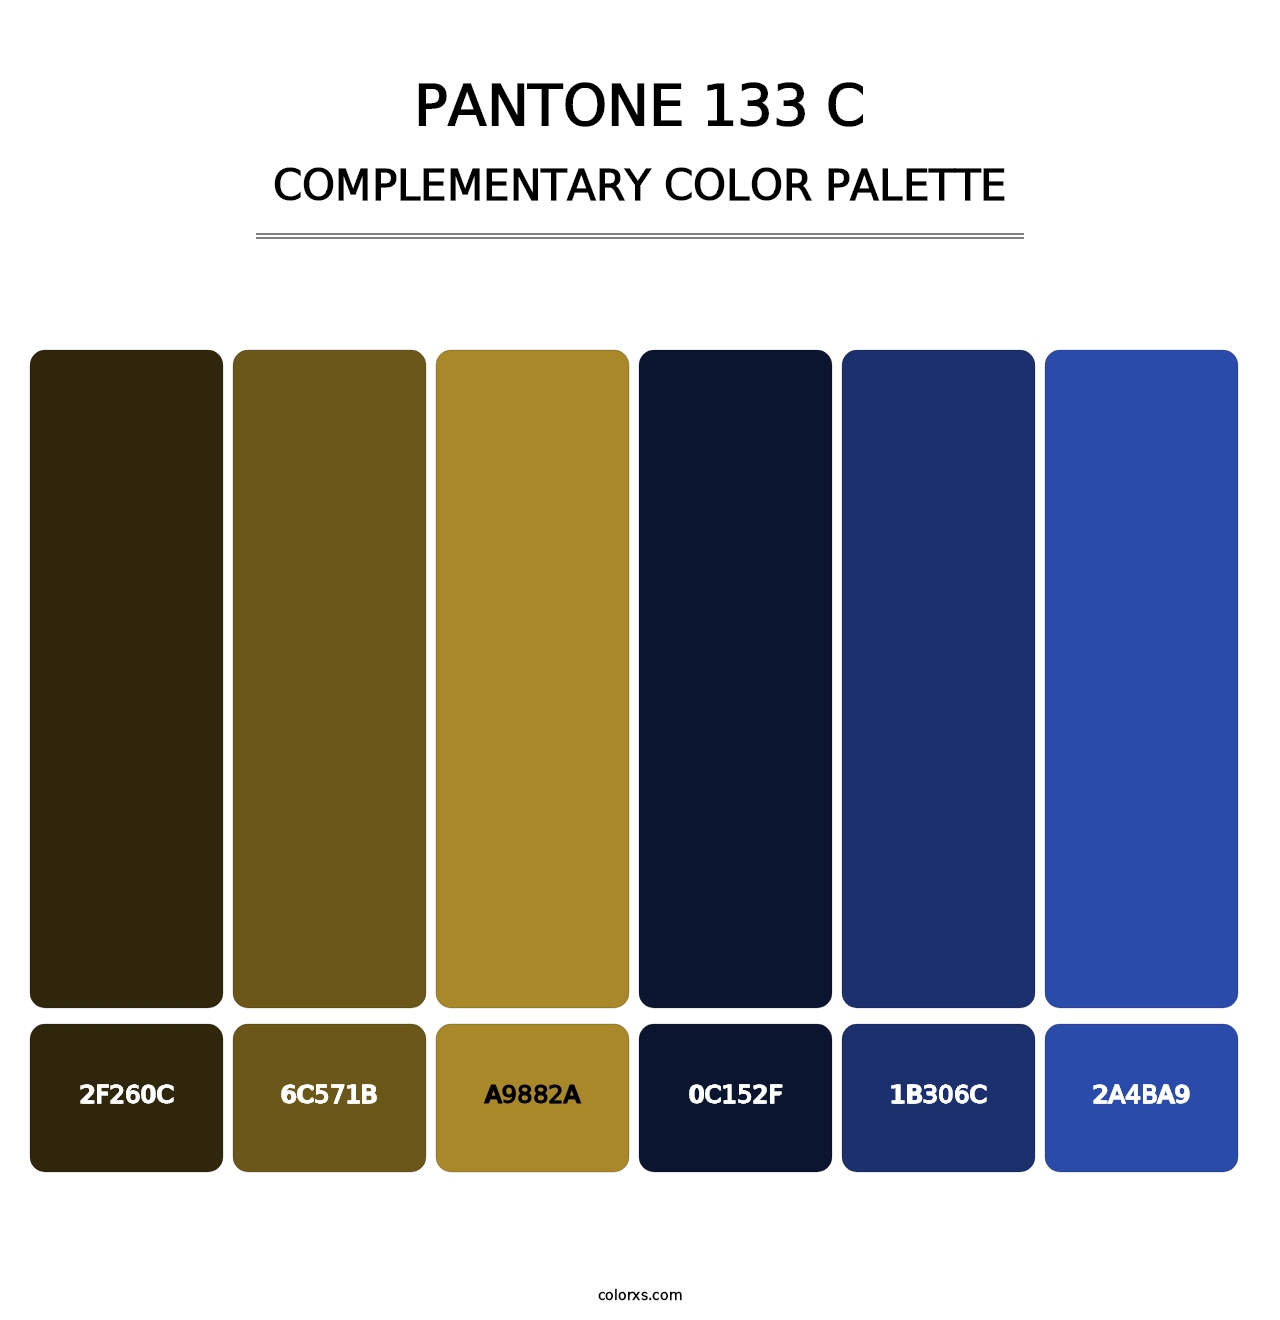 PANTONE 133 C - Complementary Color Palette